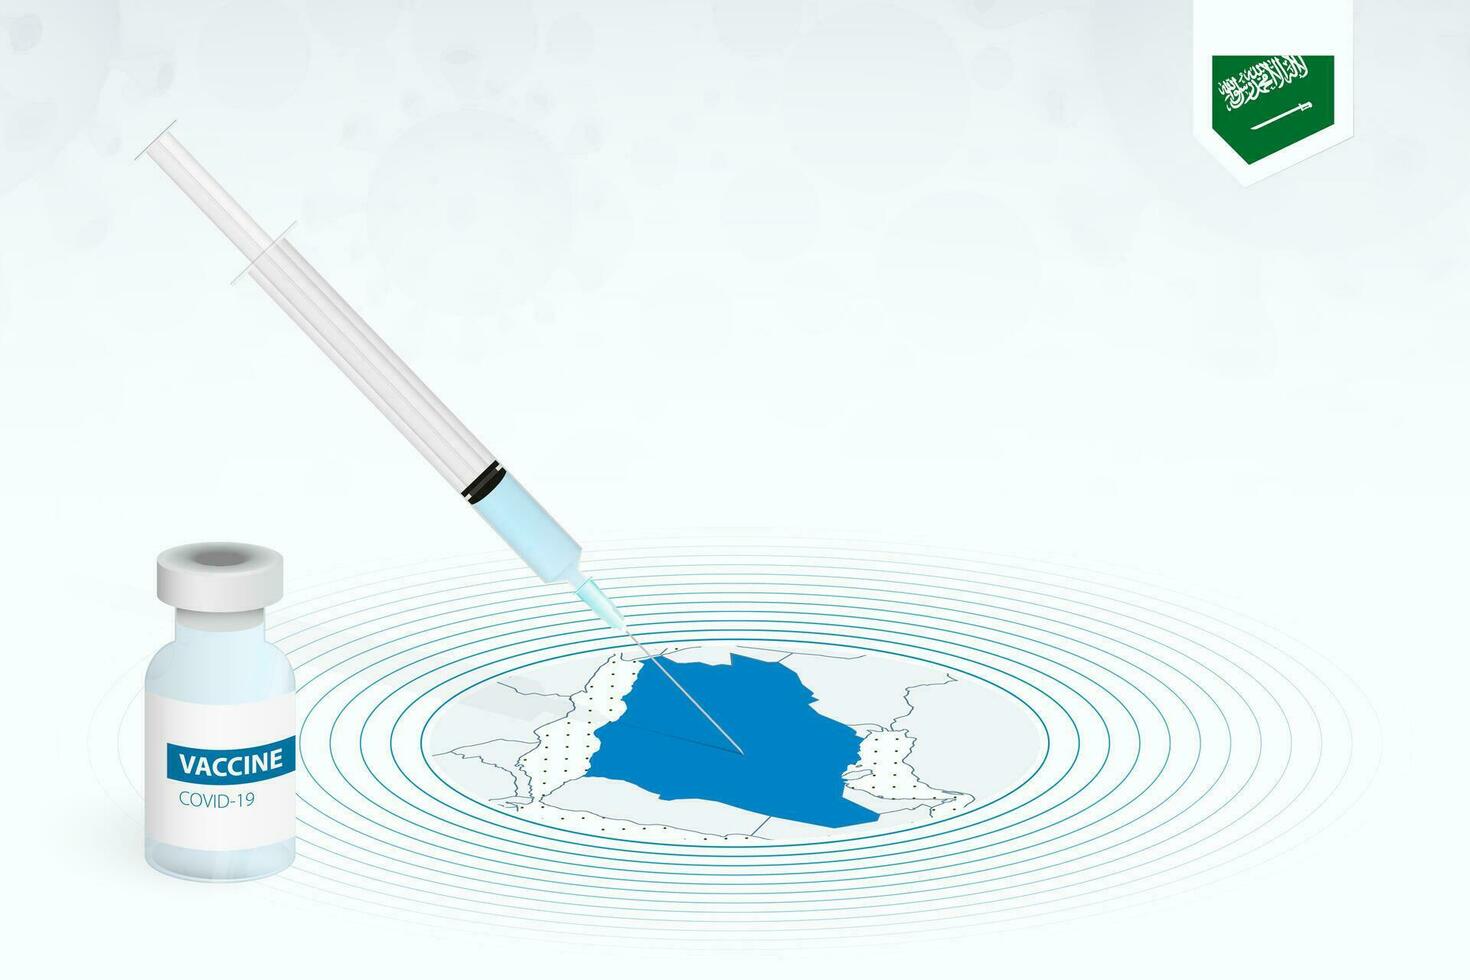 COVID-19 vaccination in Saudi Arabia, coronavirus vaccination illustration with vaccine bottle and syringe injection in map of Saudi Arabia. vector